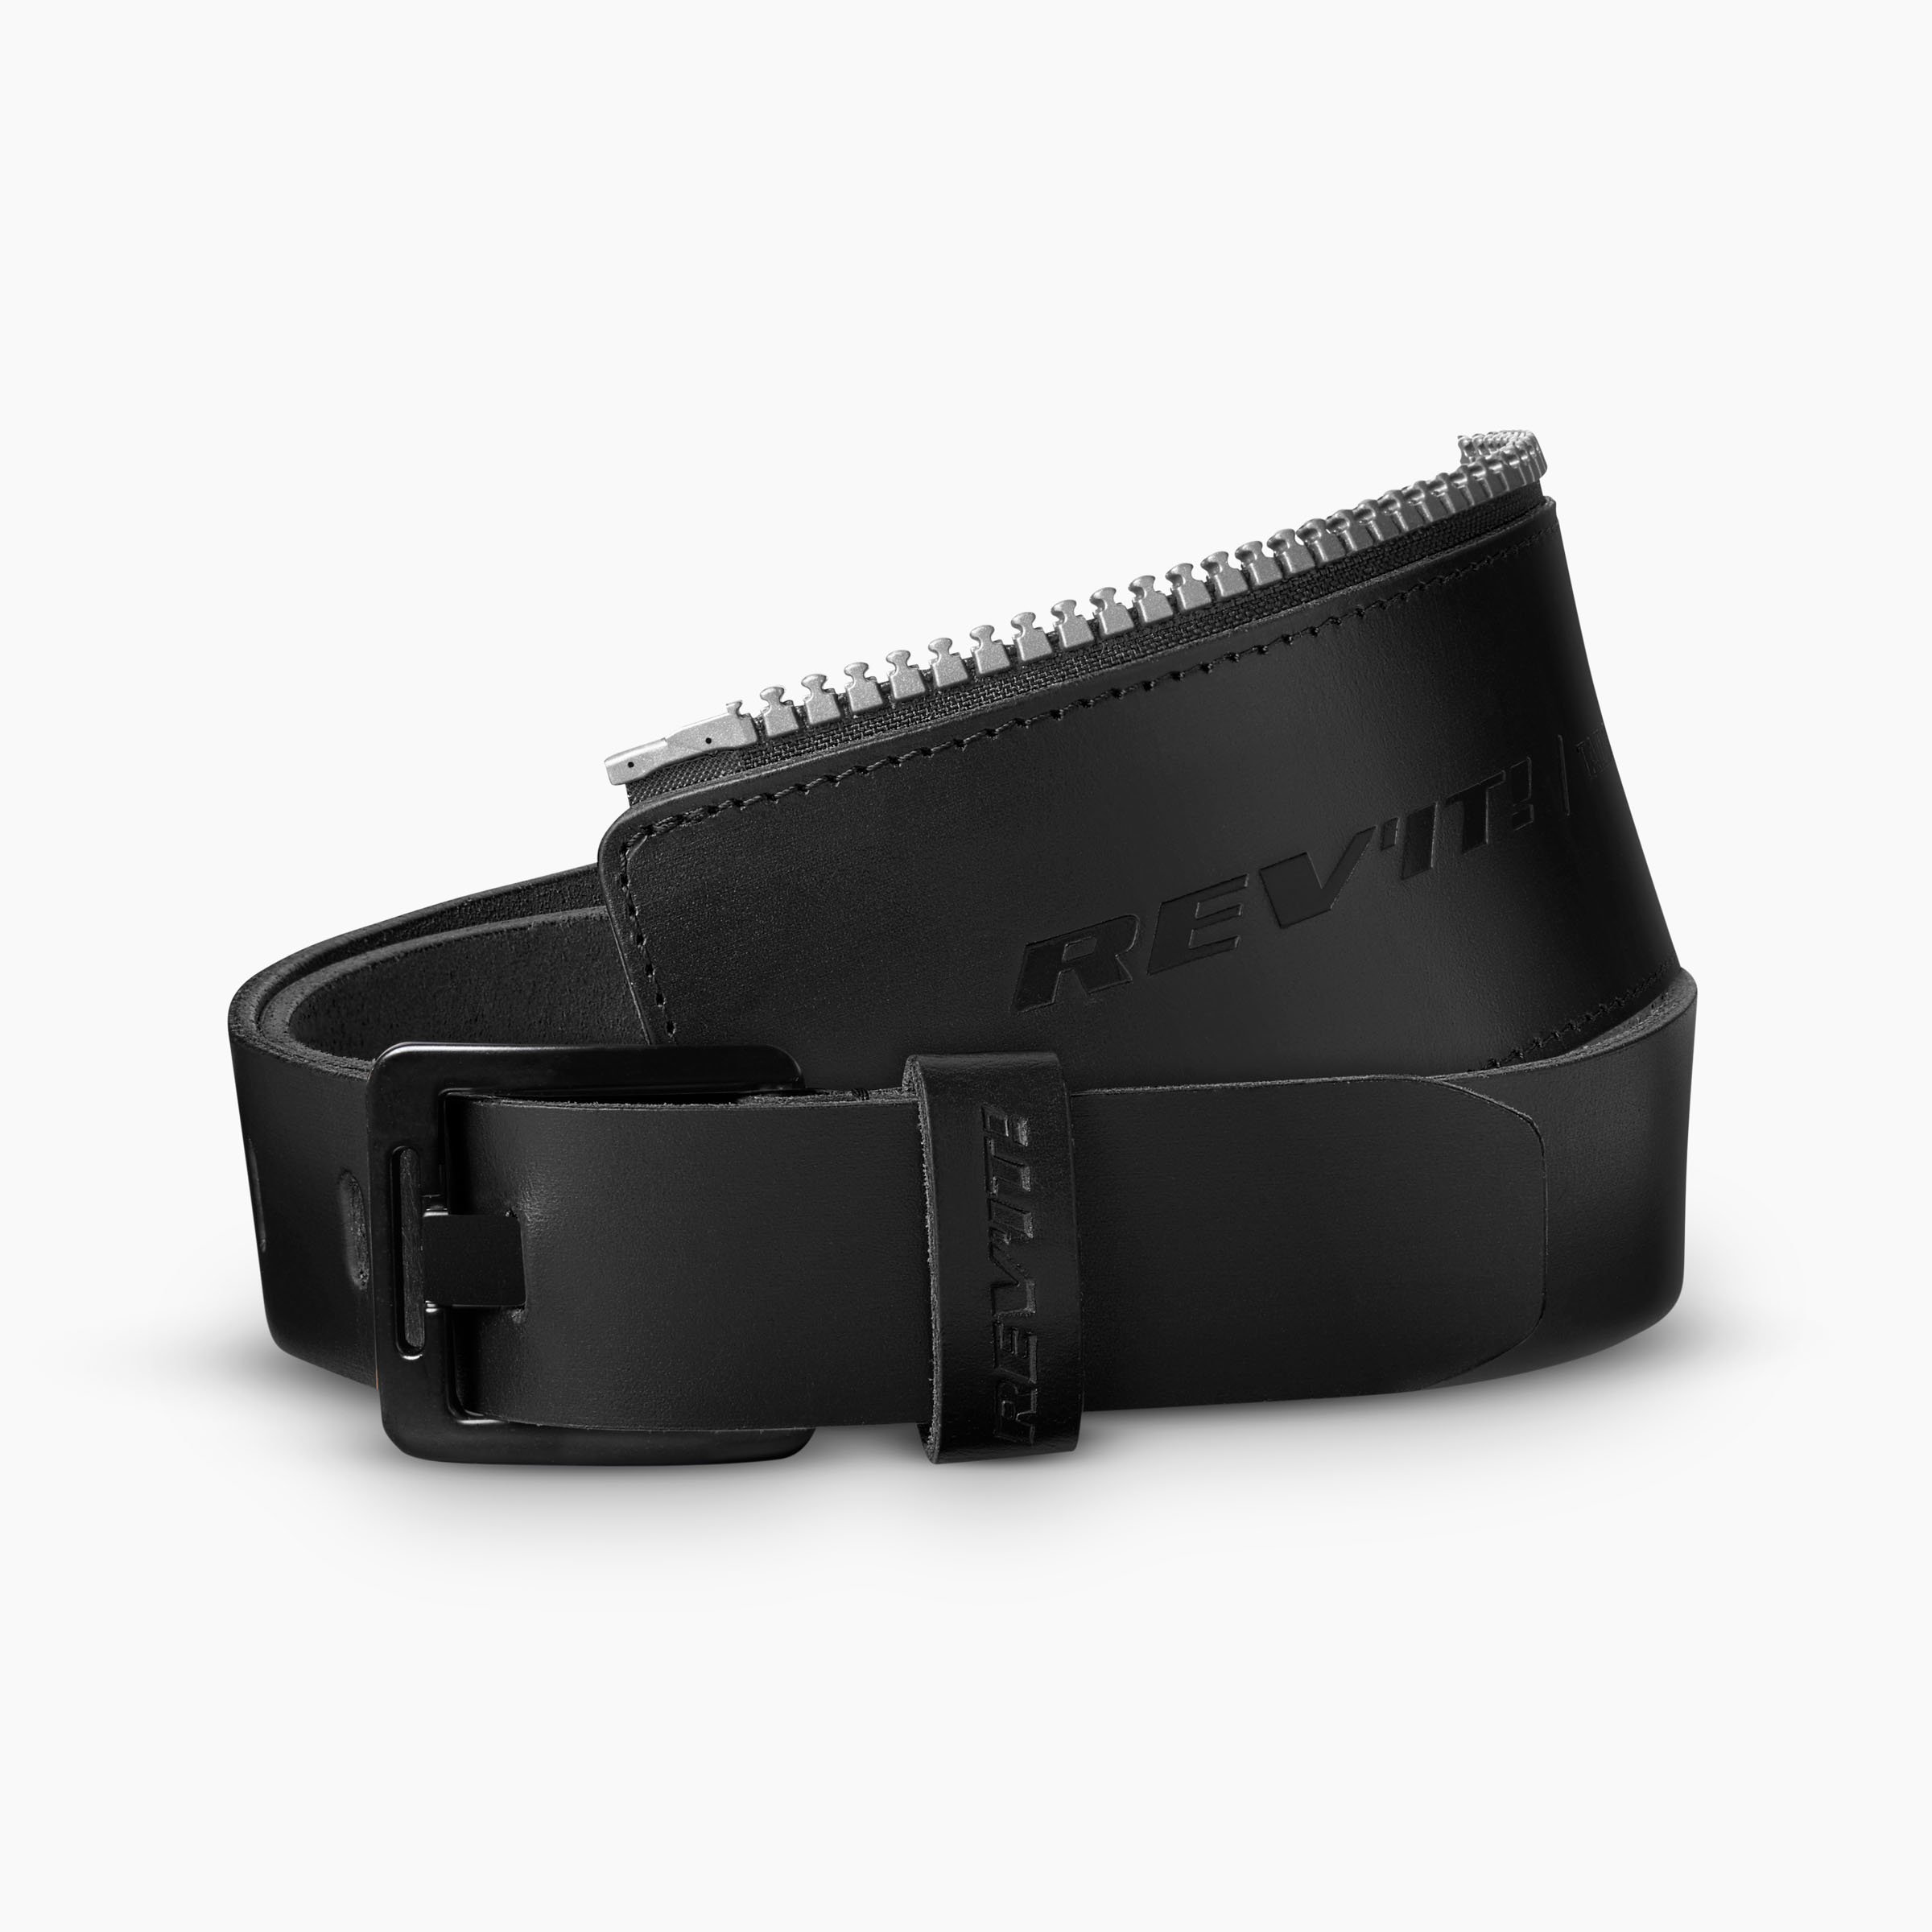 Rev'it Belt Safeway - Tøj tilbehør - Kolding MC